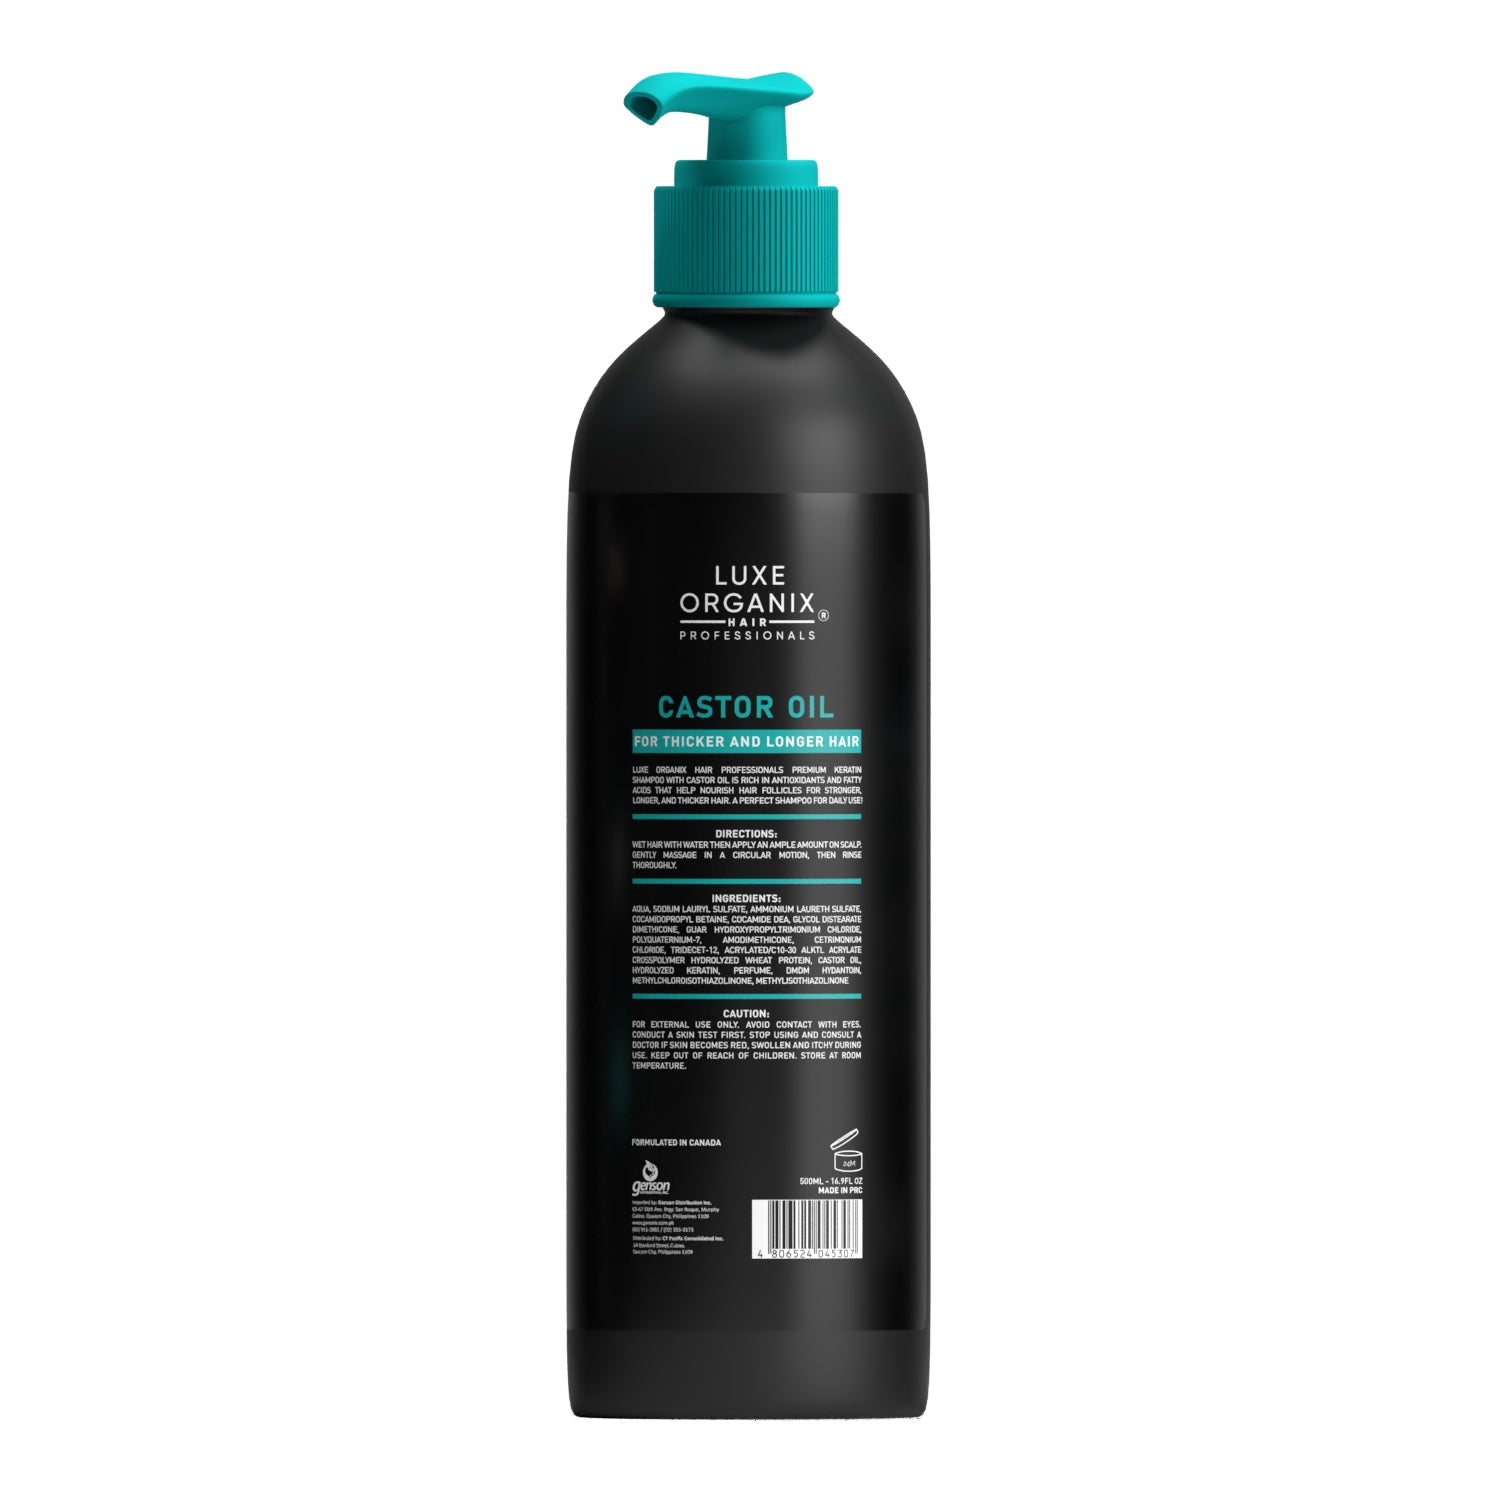 Premium Keratin Shampoo 500ml - Castor Oil